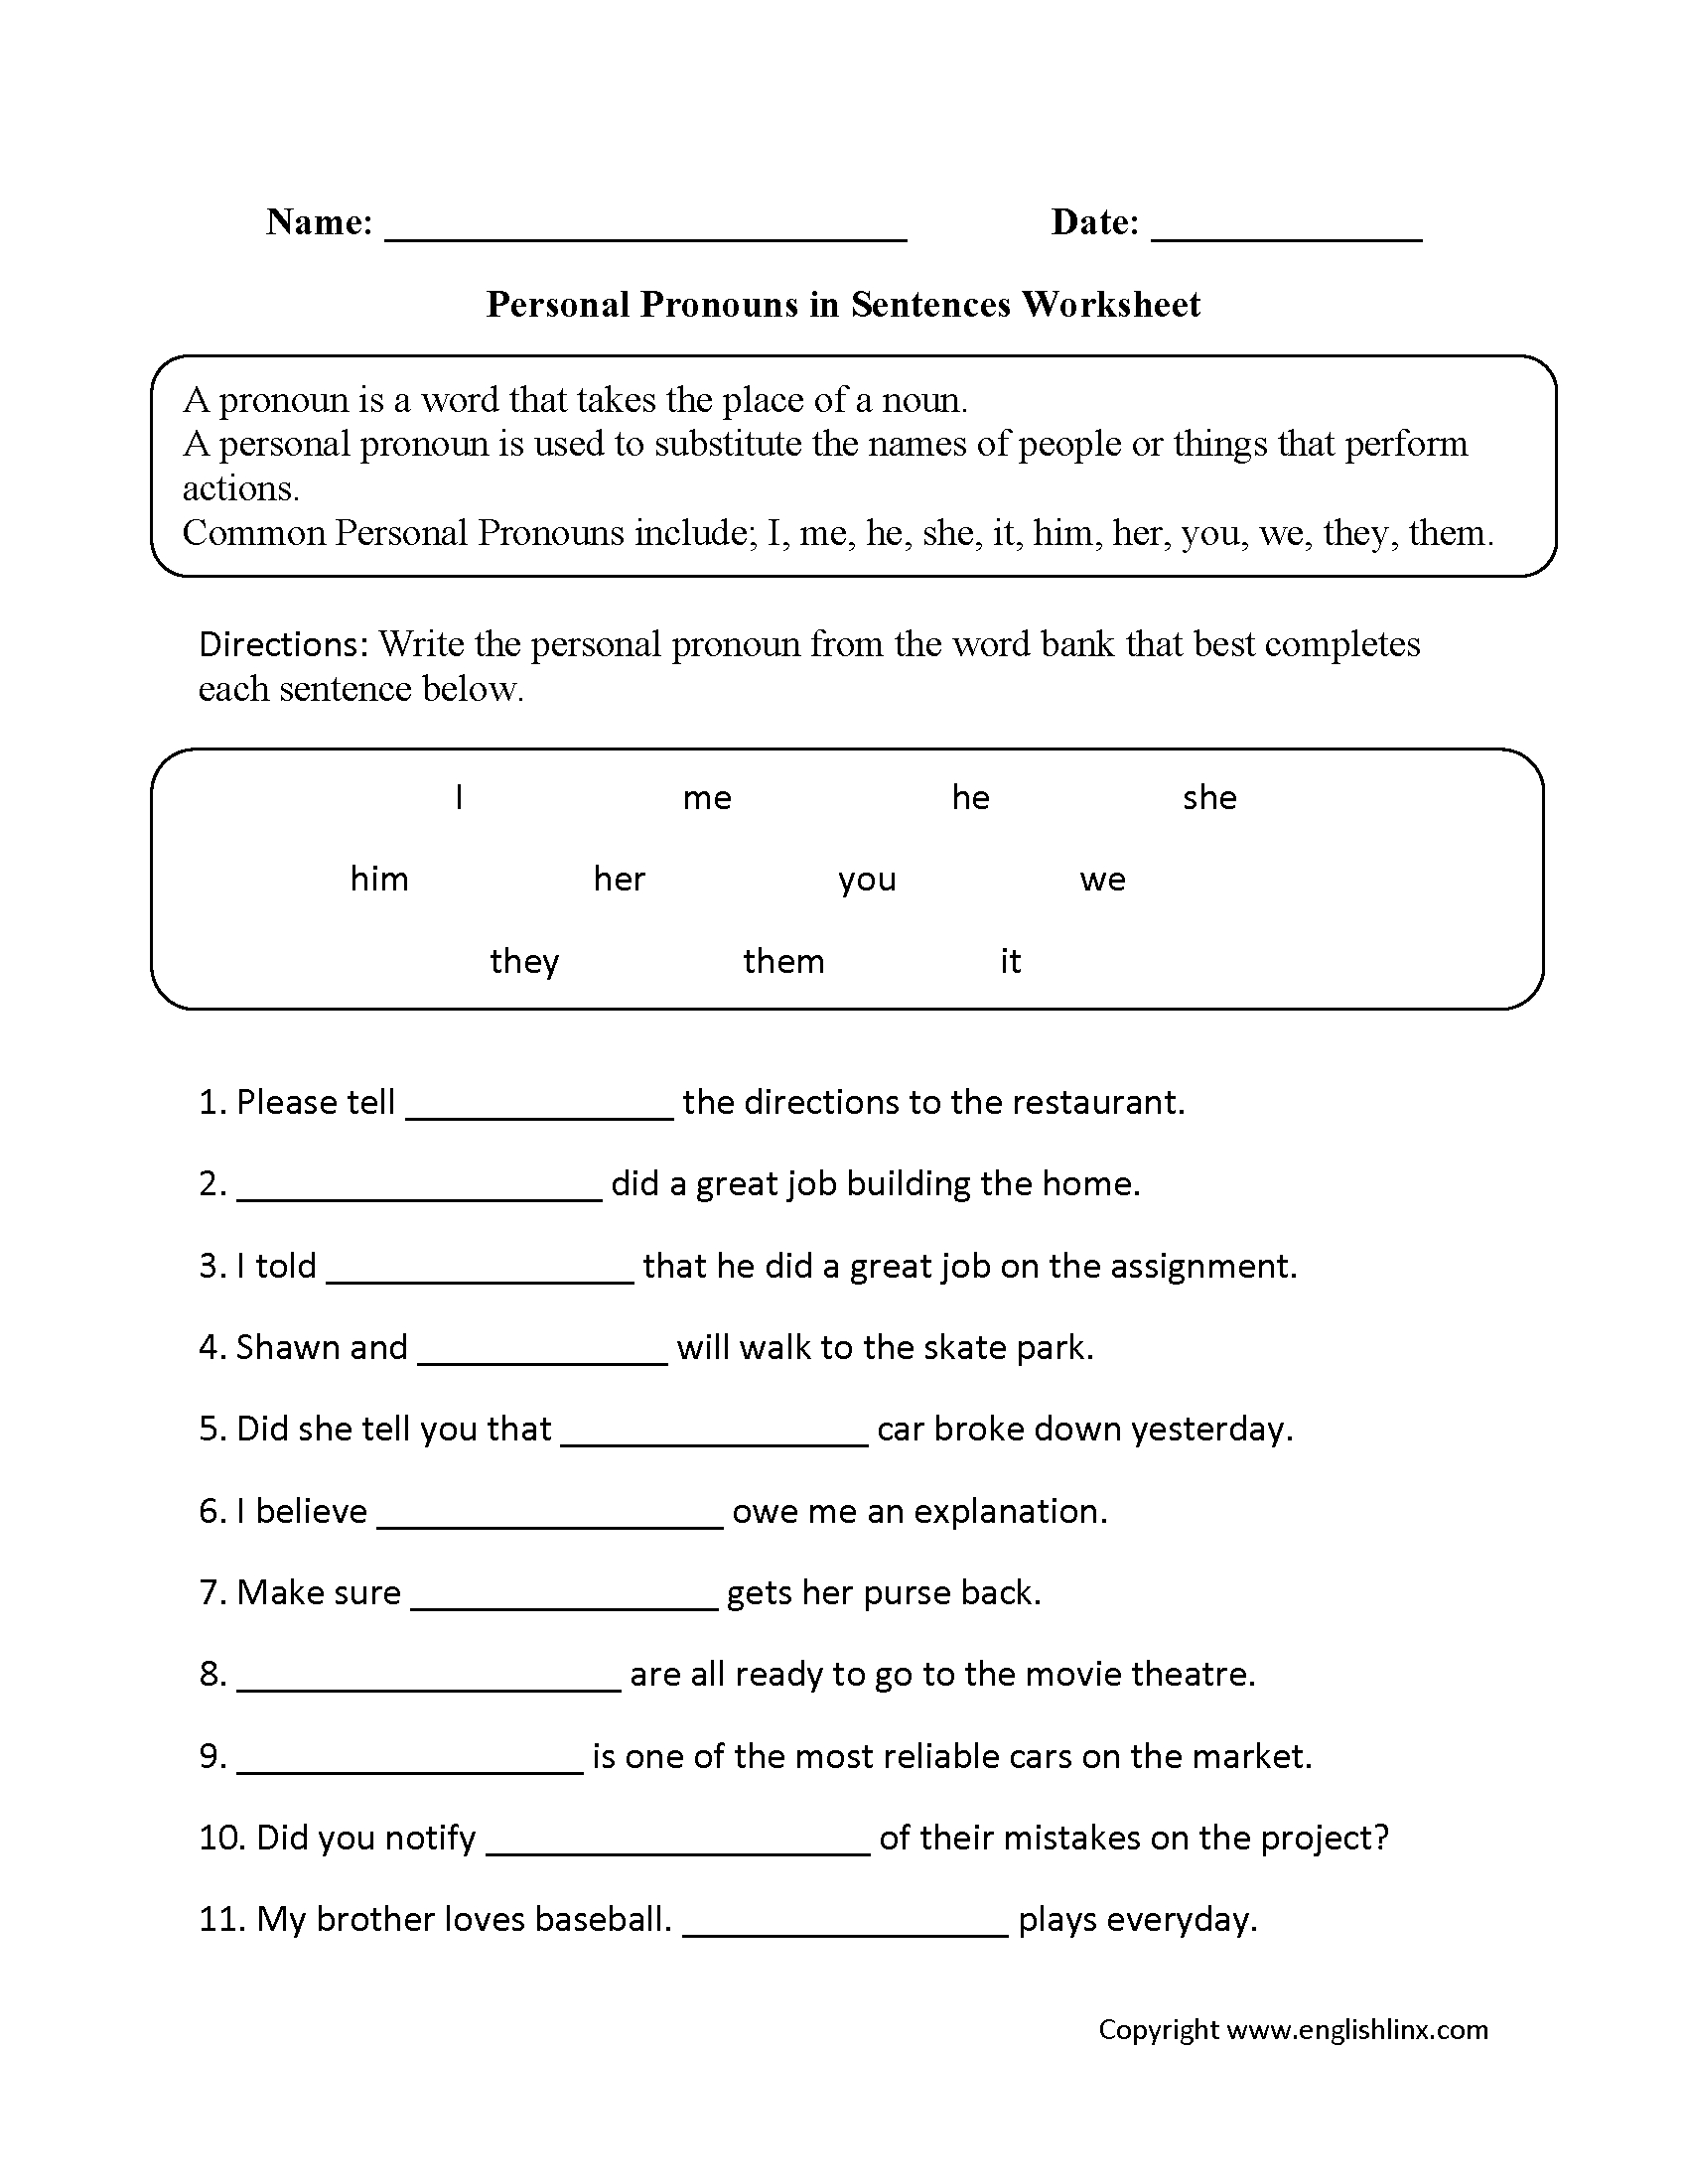 Pronouns Worksheets | Personal Pronouns Worksheets - Daily Language Review Grade 5 Free Printable